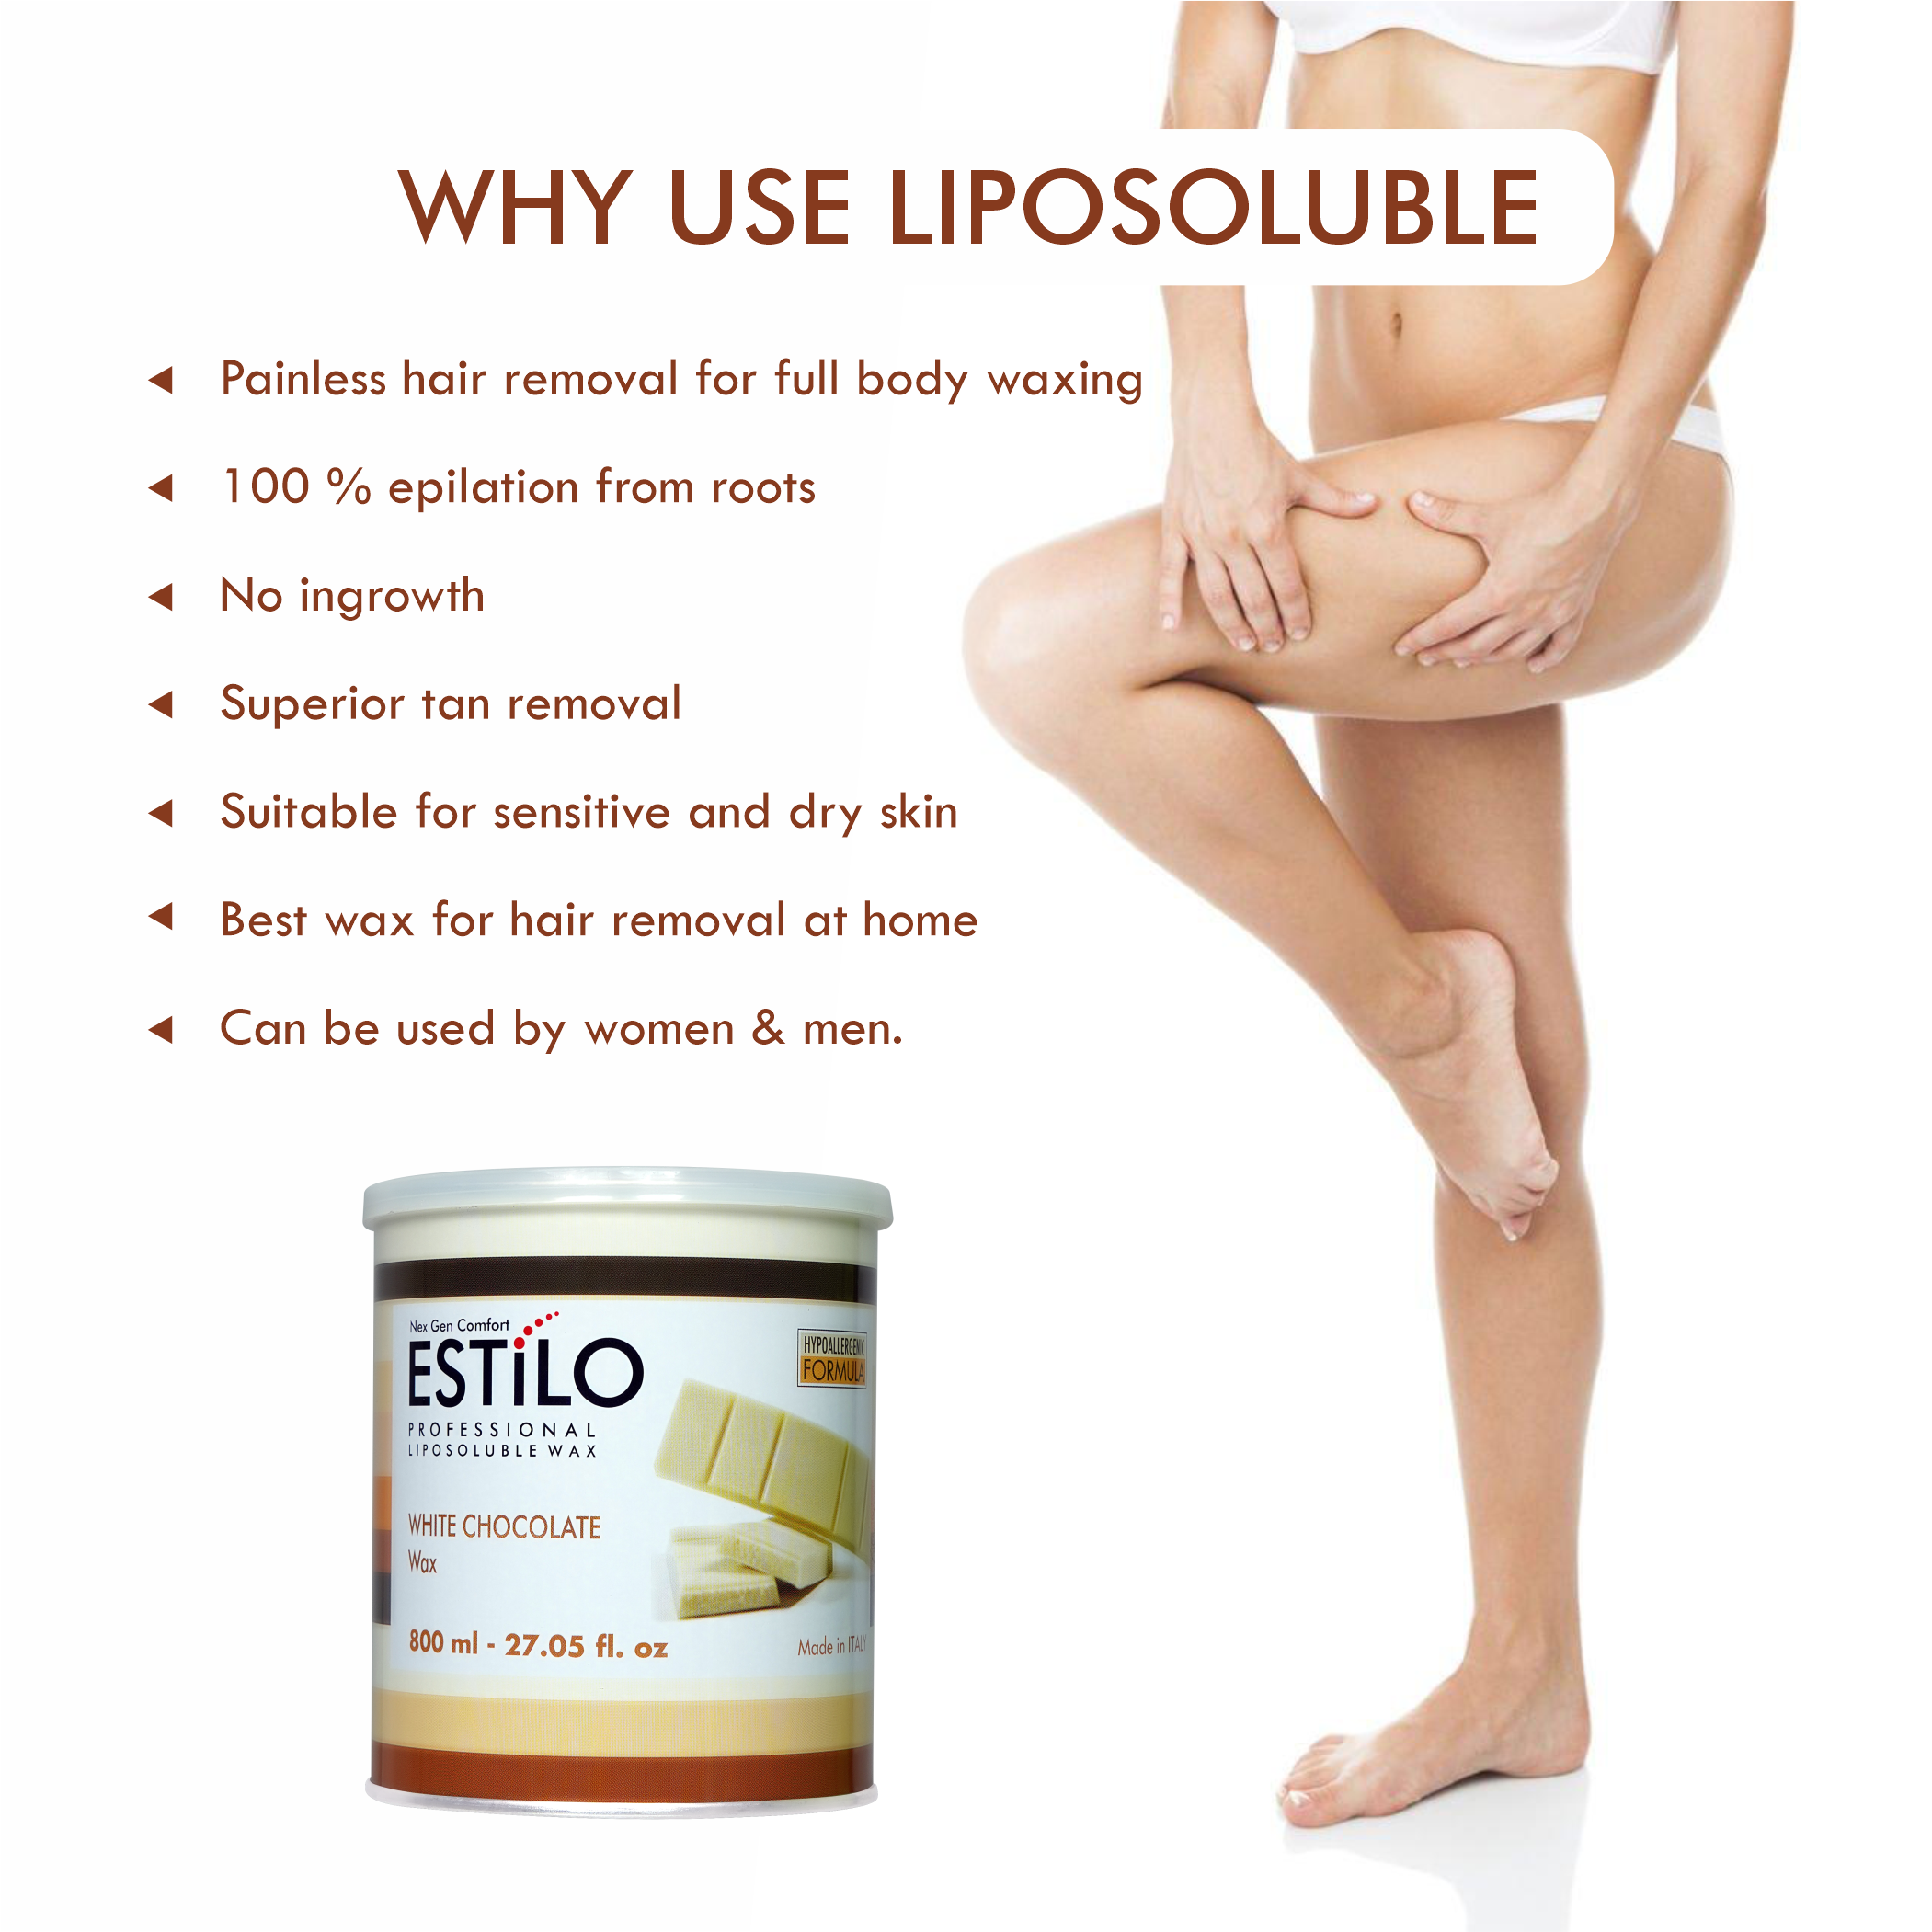 Why use liposoluble wax